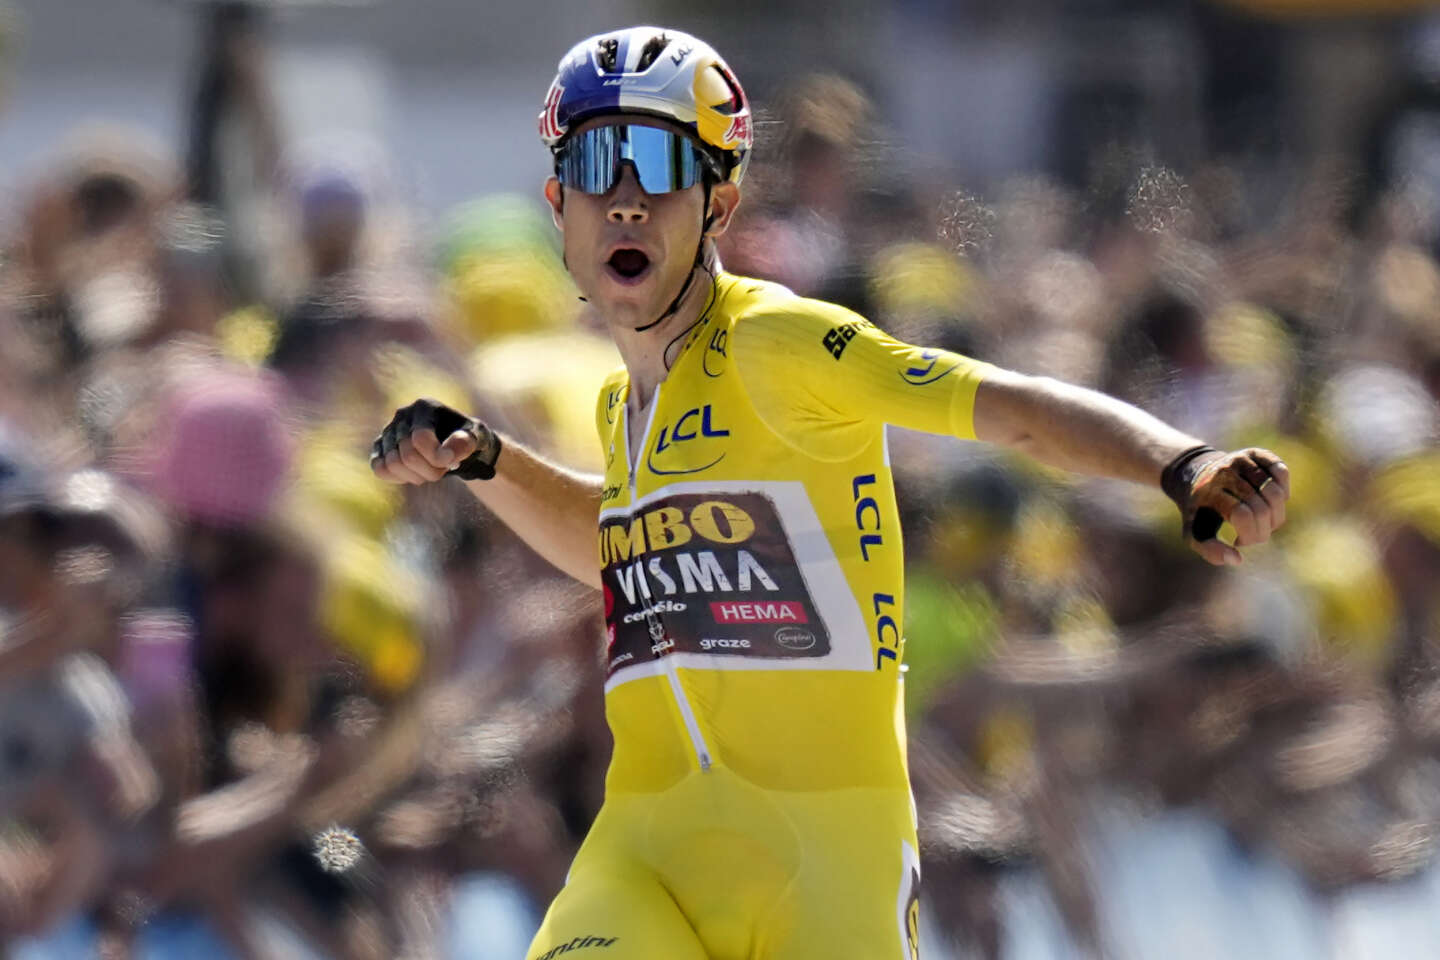 Tour de France Yellow jersey Wout van Aert wins stage 4 in Calais